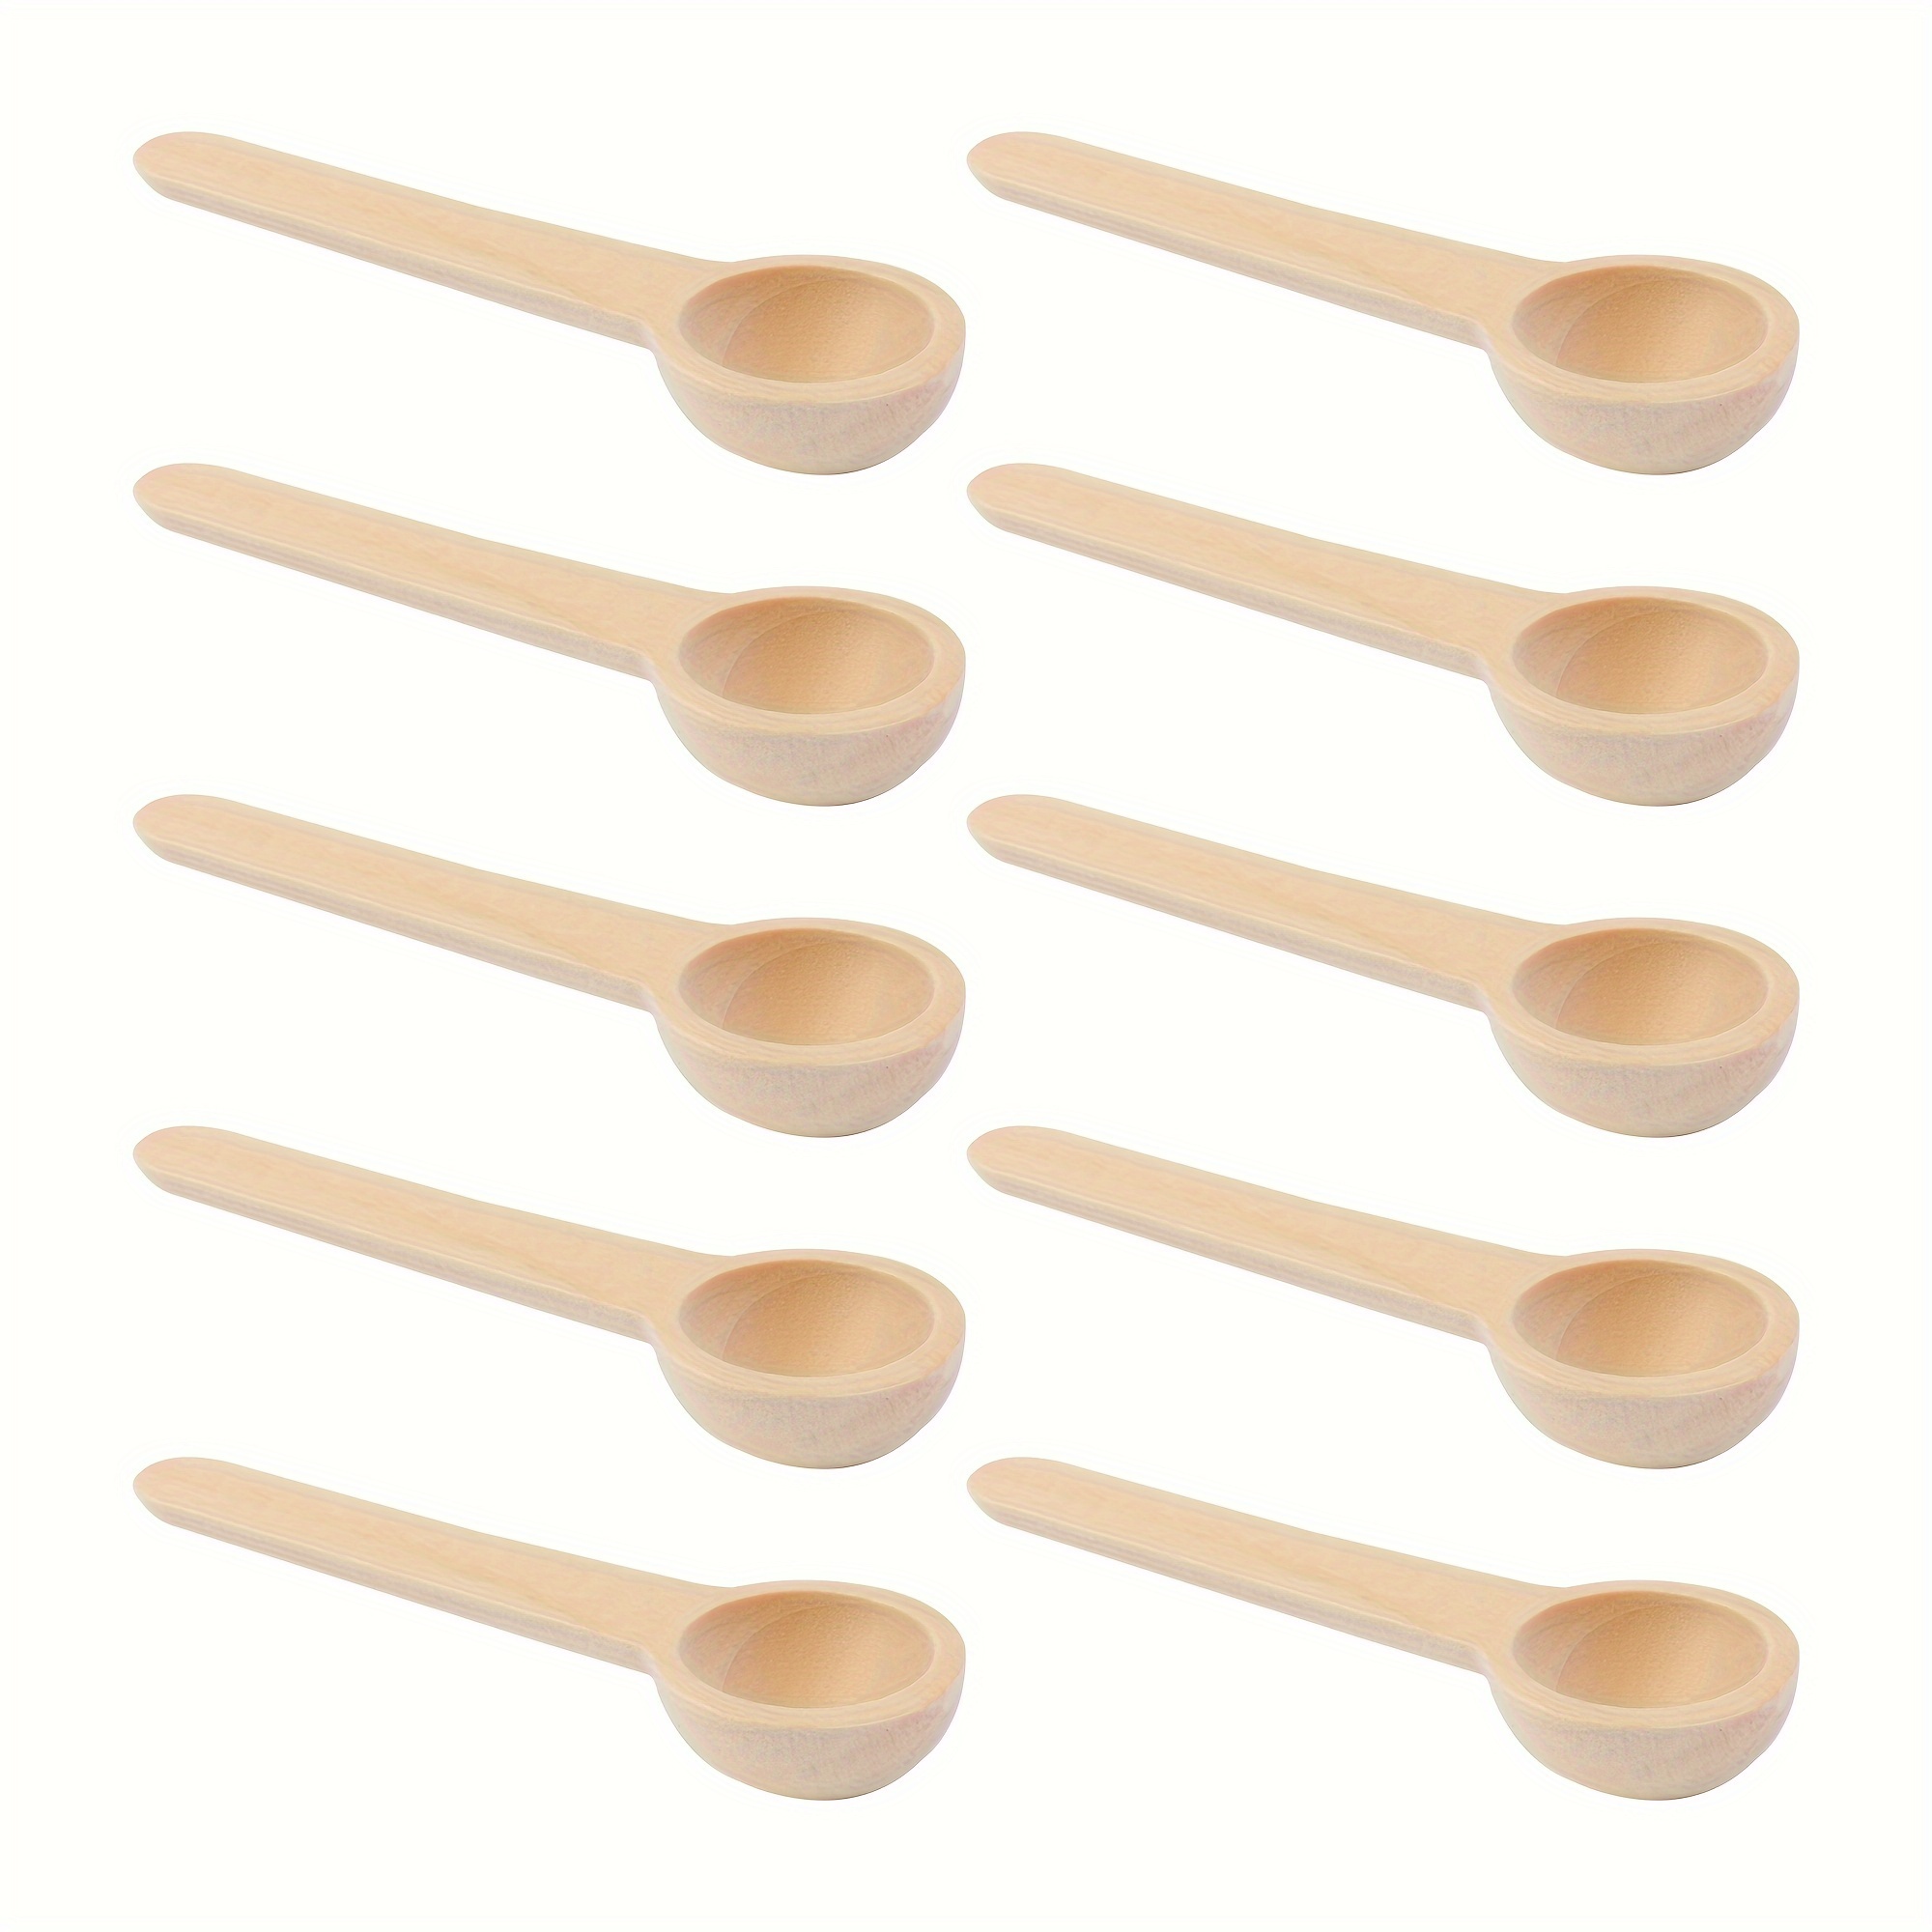 4pcs Wooden Round Handle Scoop Teaspoon Mini Small Salt Shovel